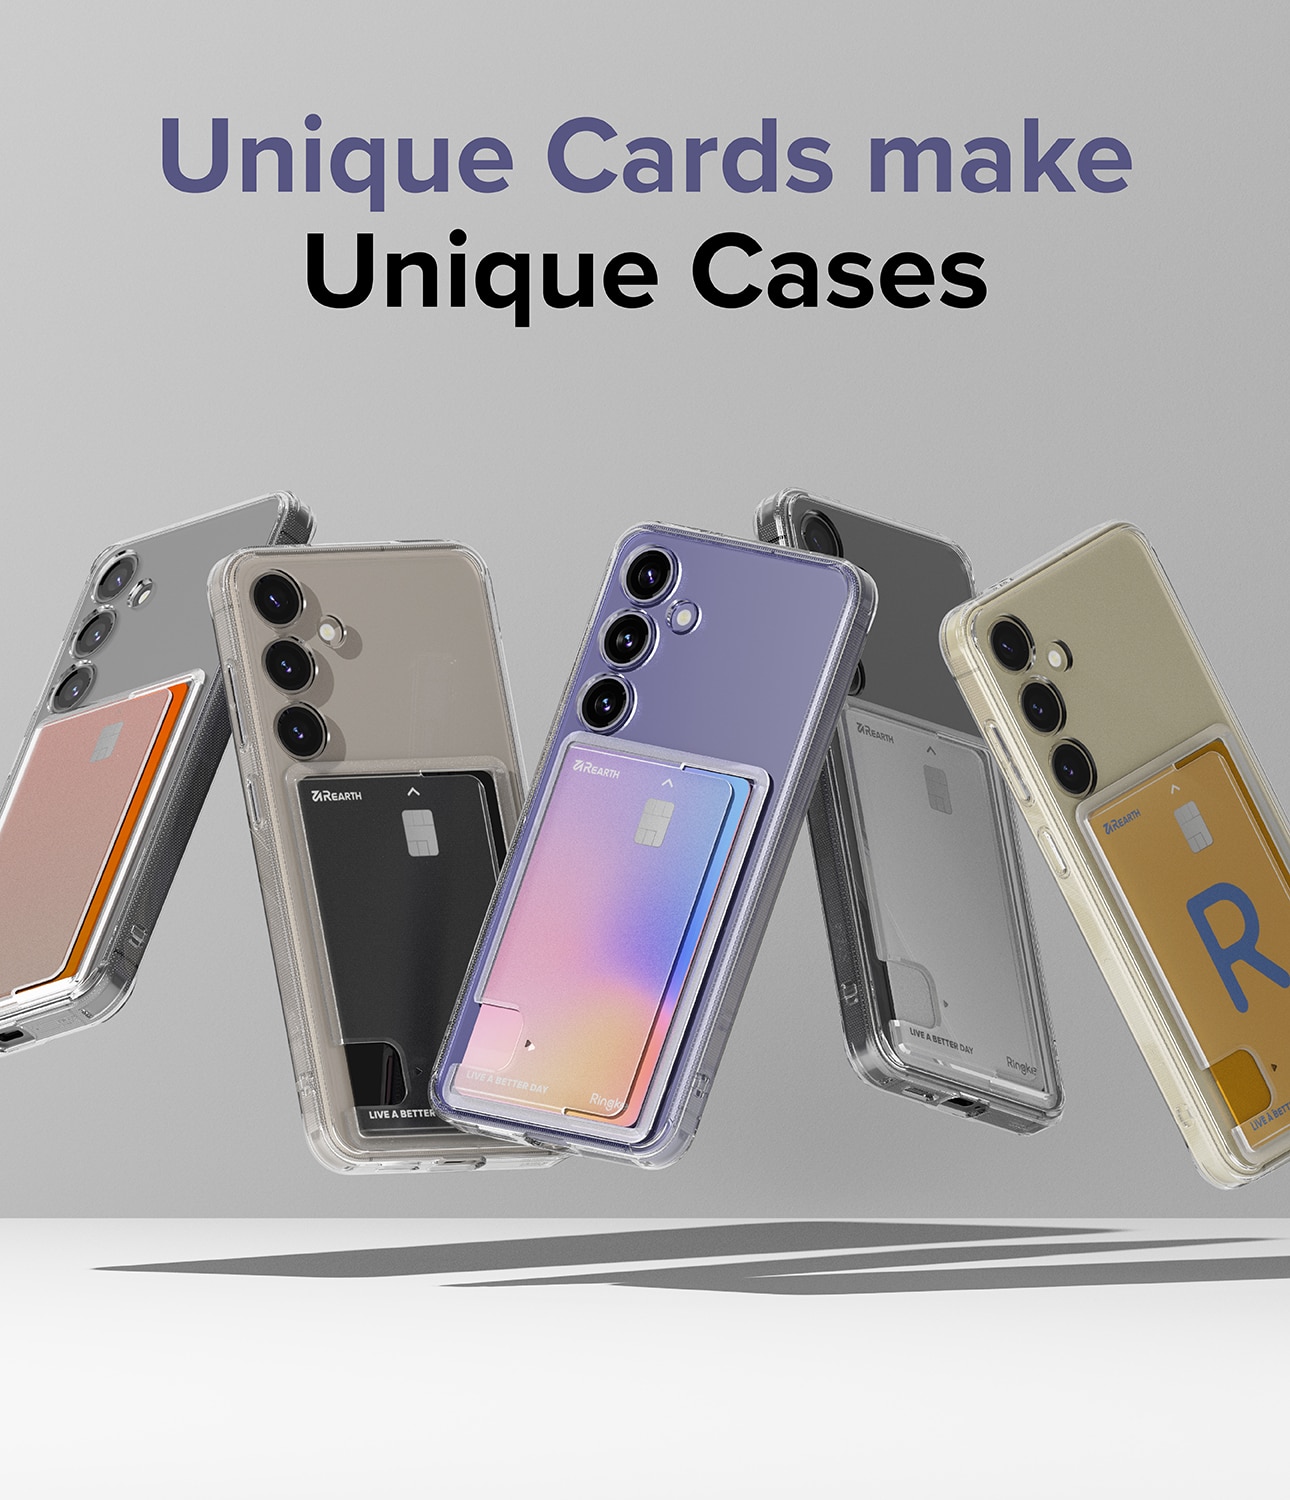 Coque Fusion Card Samsung Galaxy S24, transparent